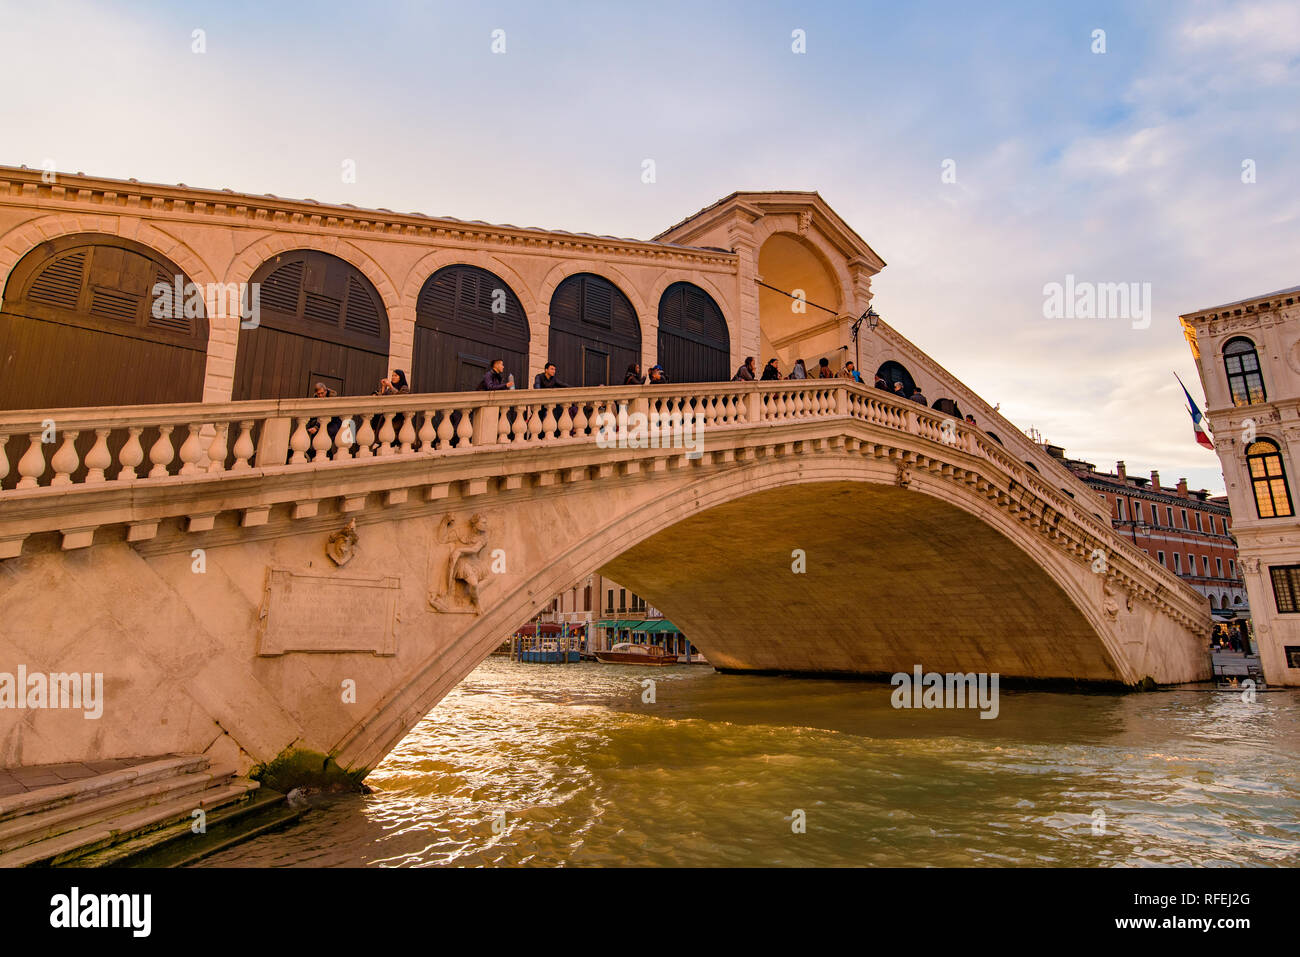 Rialto Brücke (Ponte de Rialto) über den Canal Grande bei Sonnenaufgang/Sonnenuntergang, Venedig, Italien Stockfoto